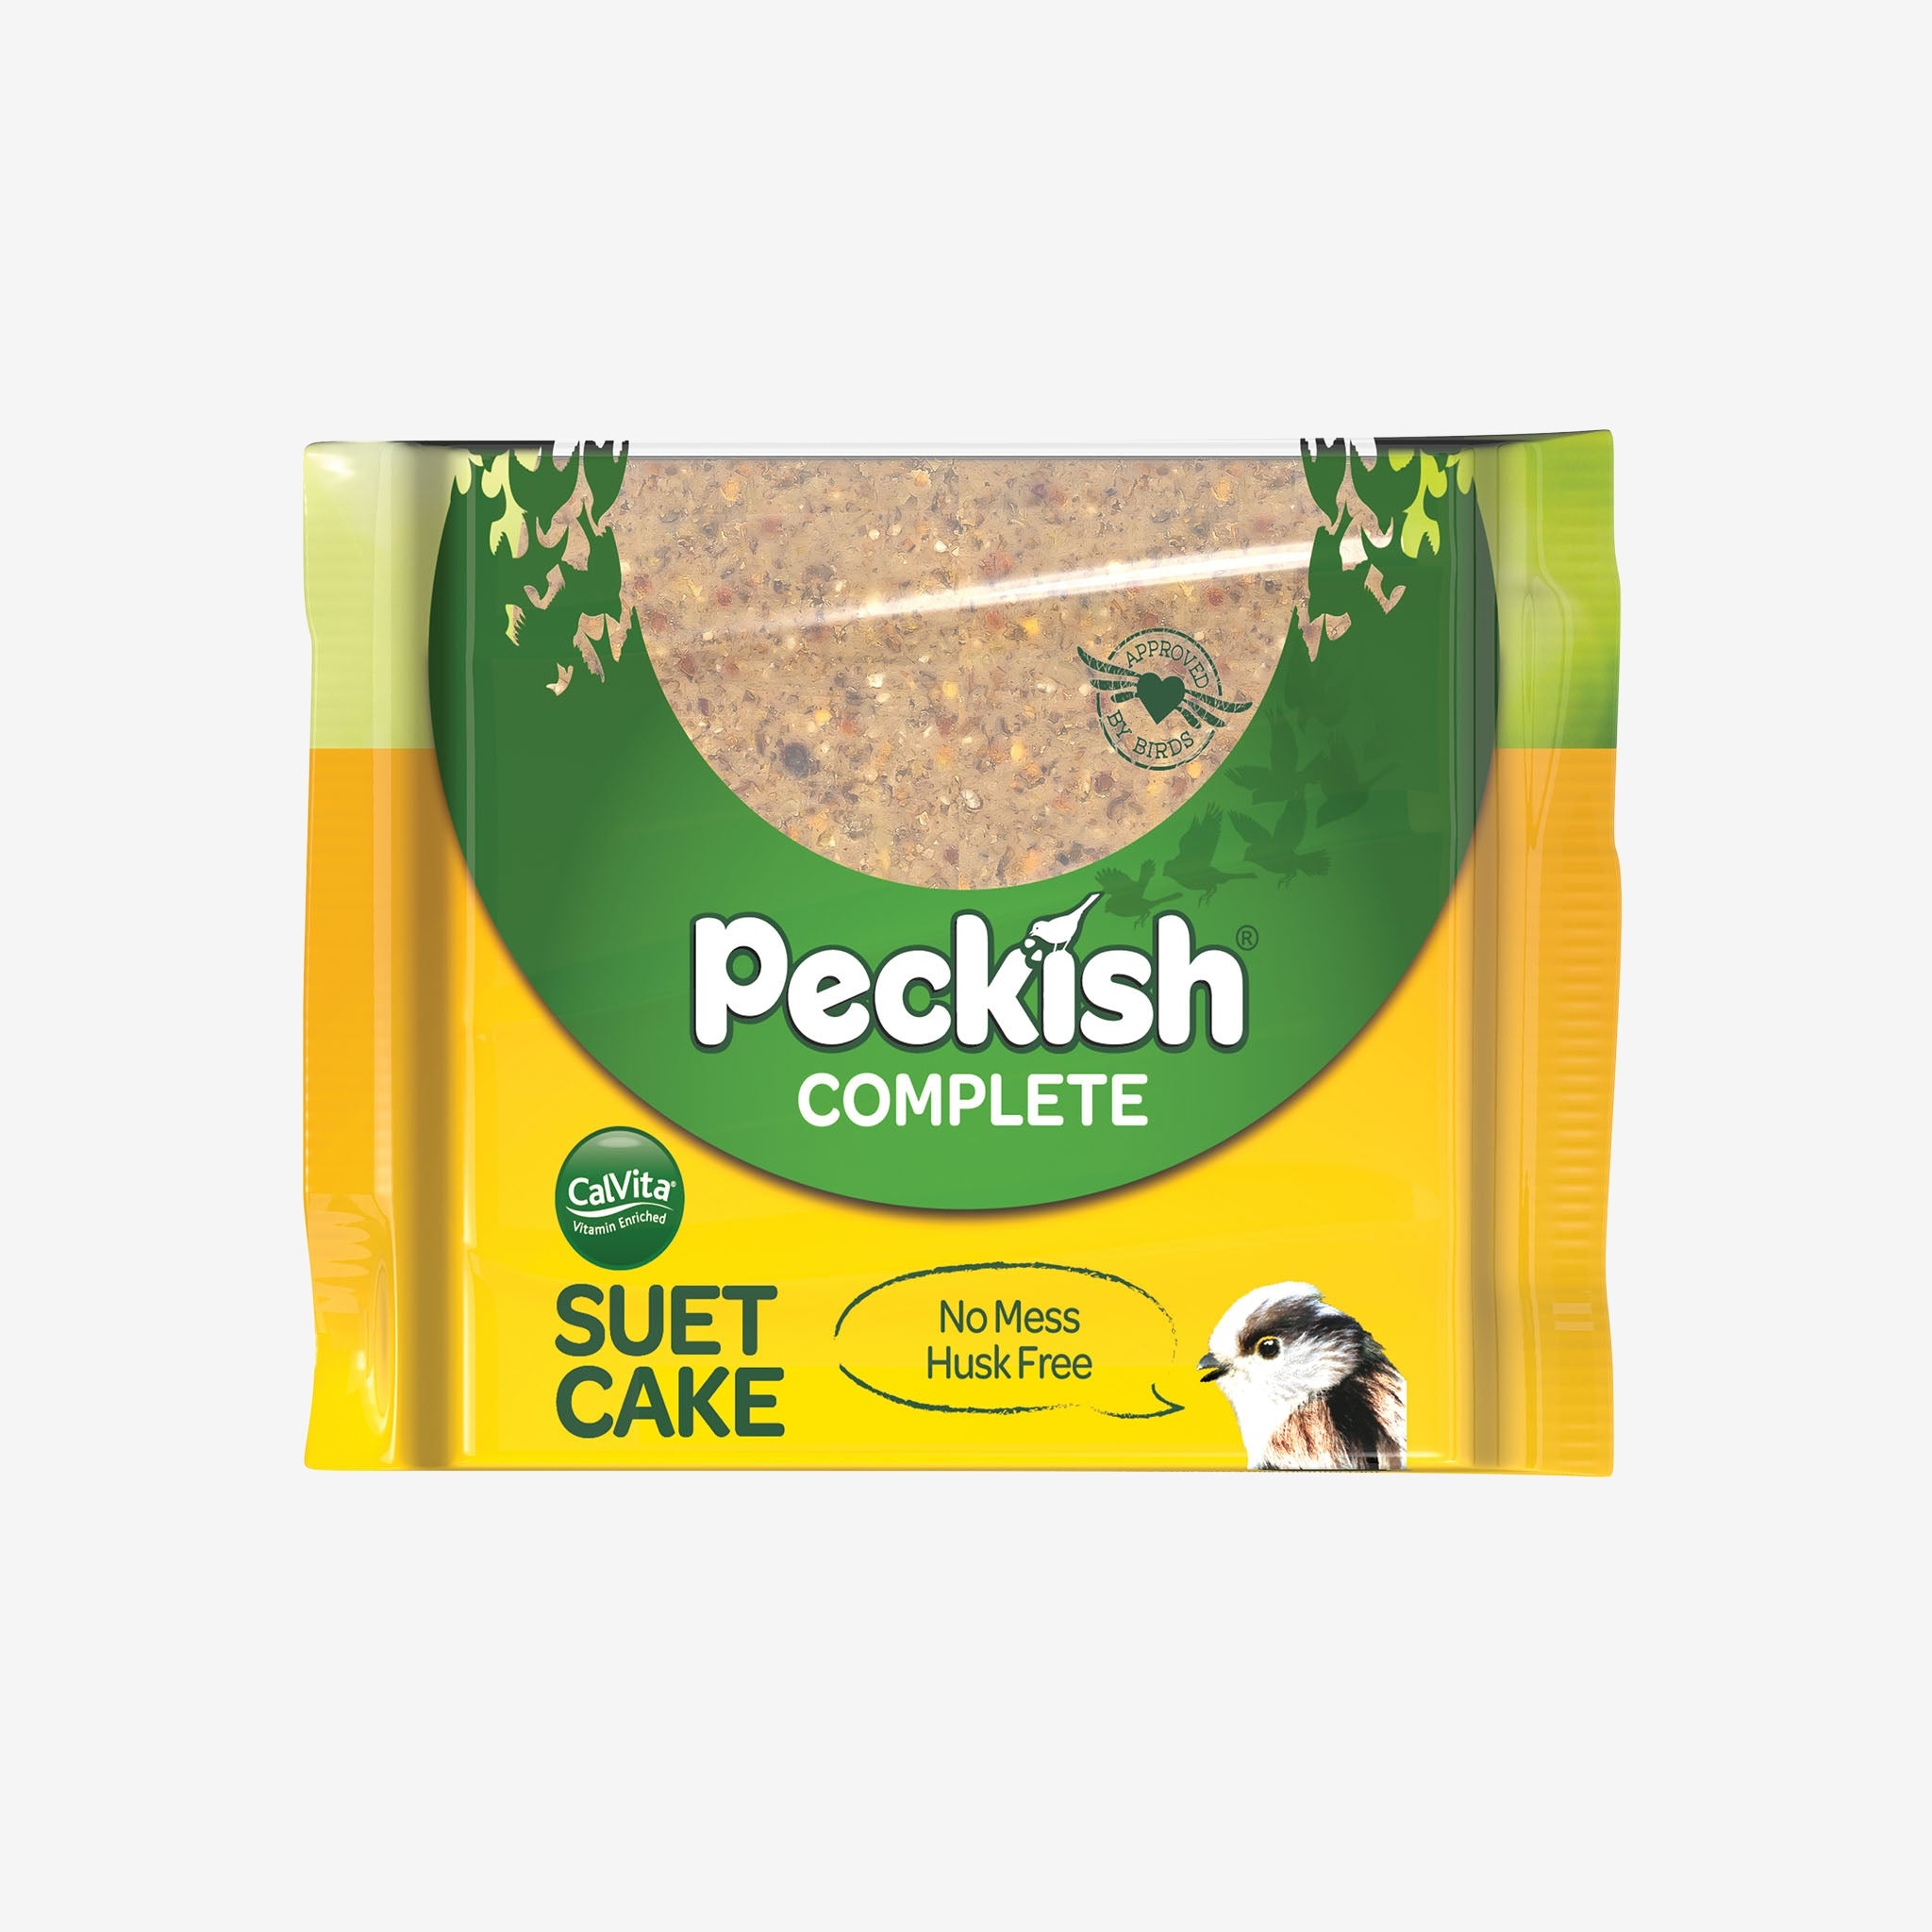 Peckish Complete Suet Cakes